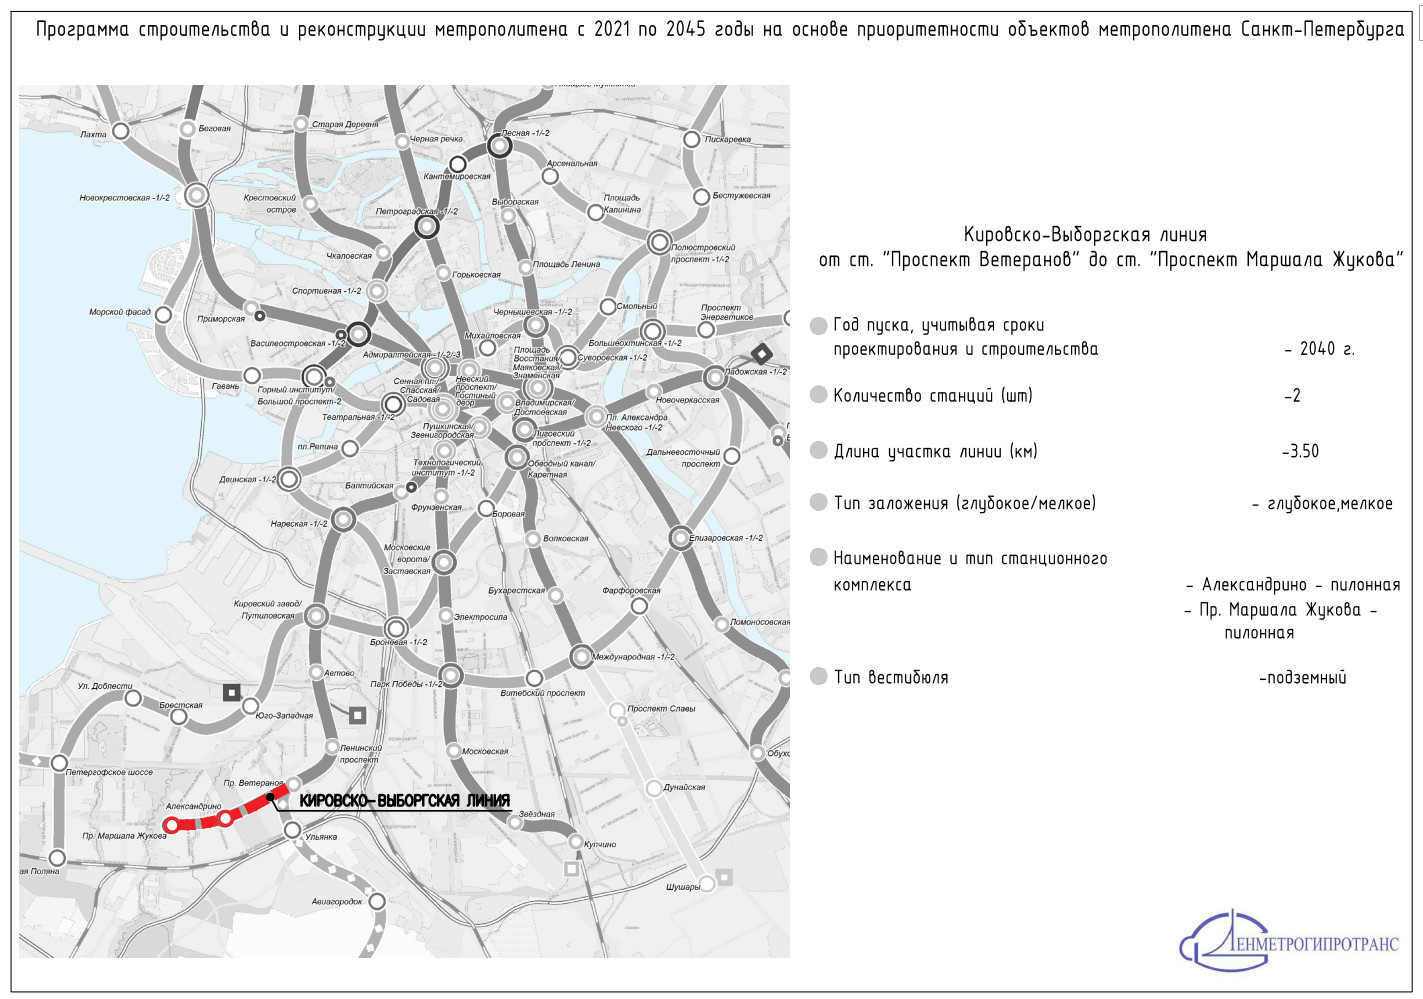 карта метро город санкт петербург